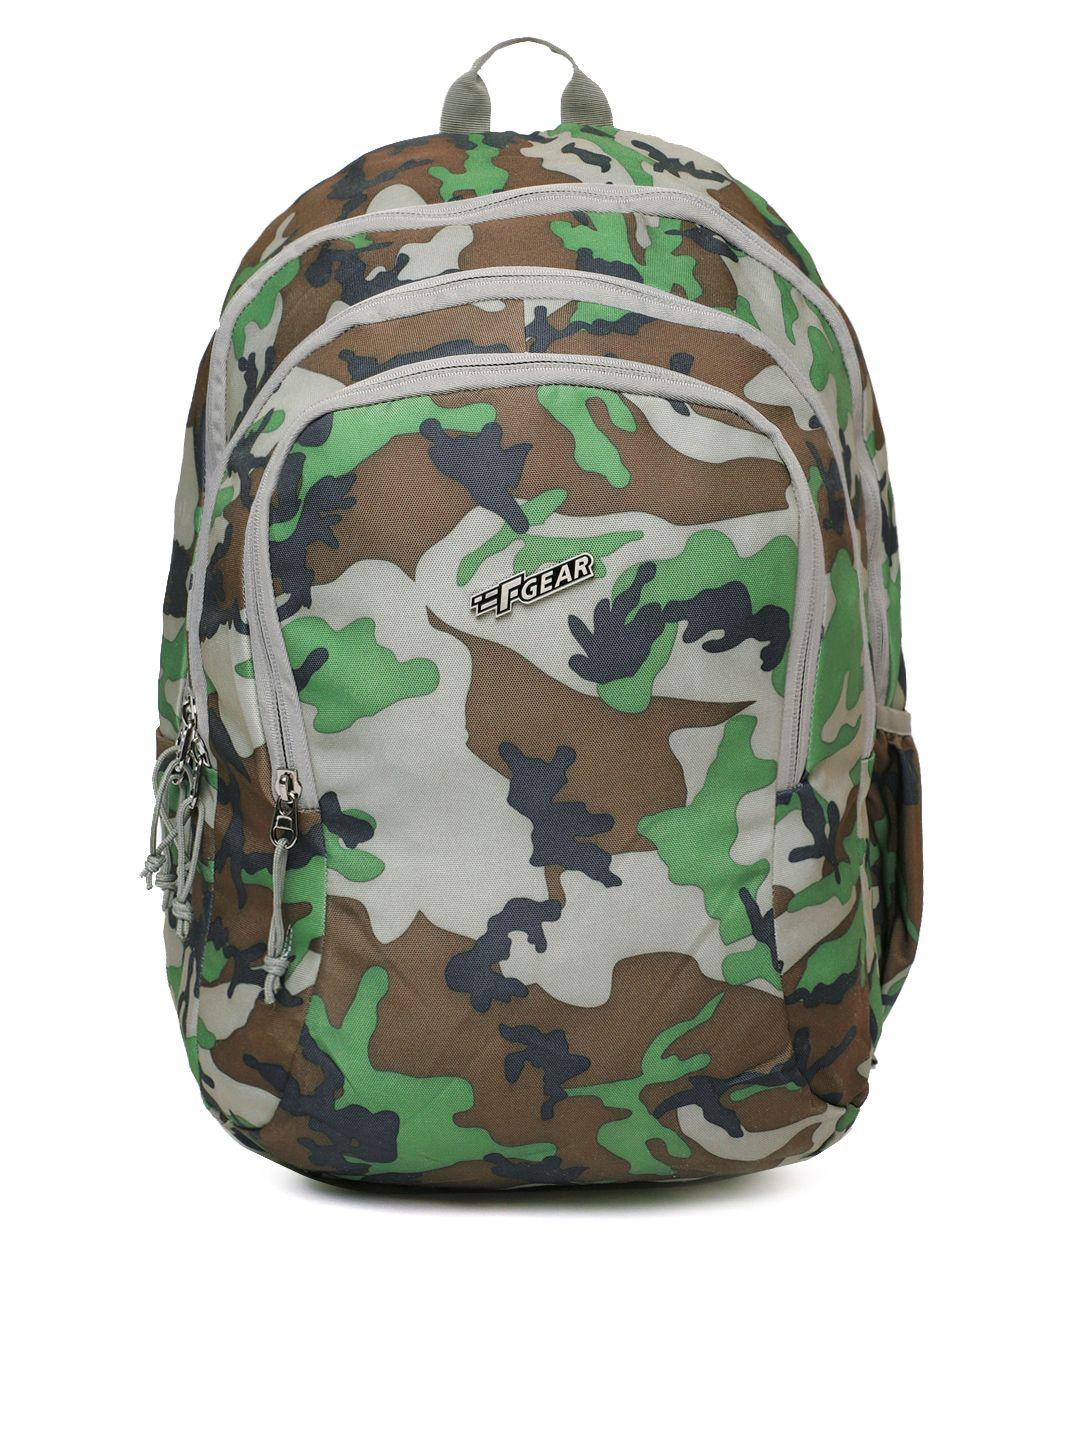 f gear unisex green & grey printed backpack